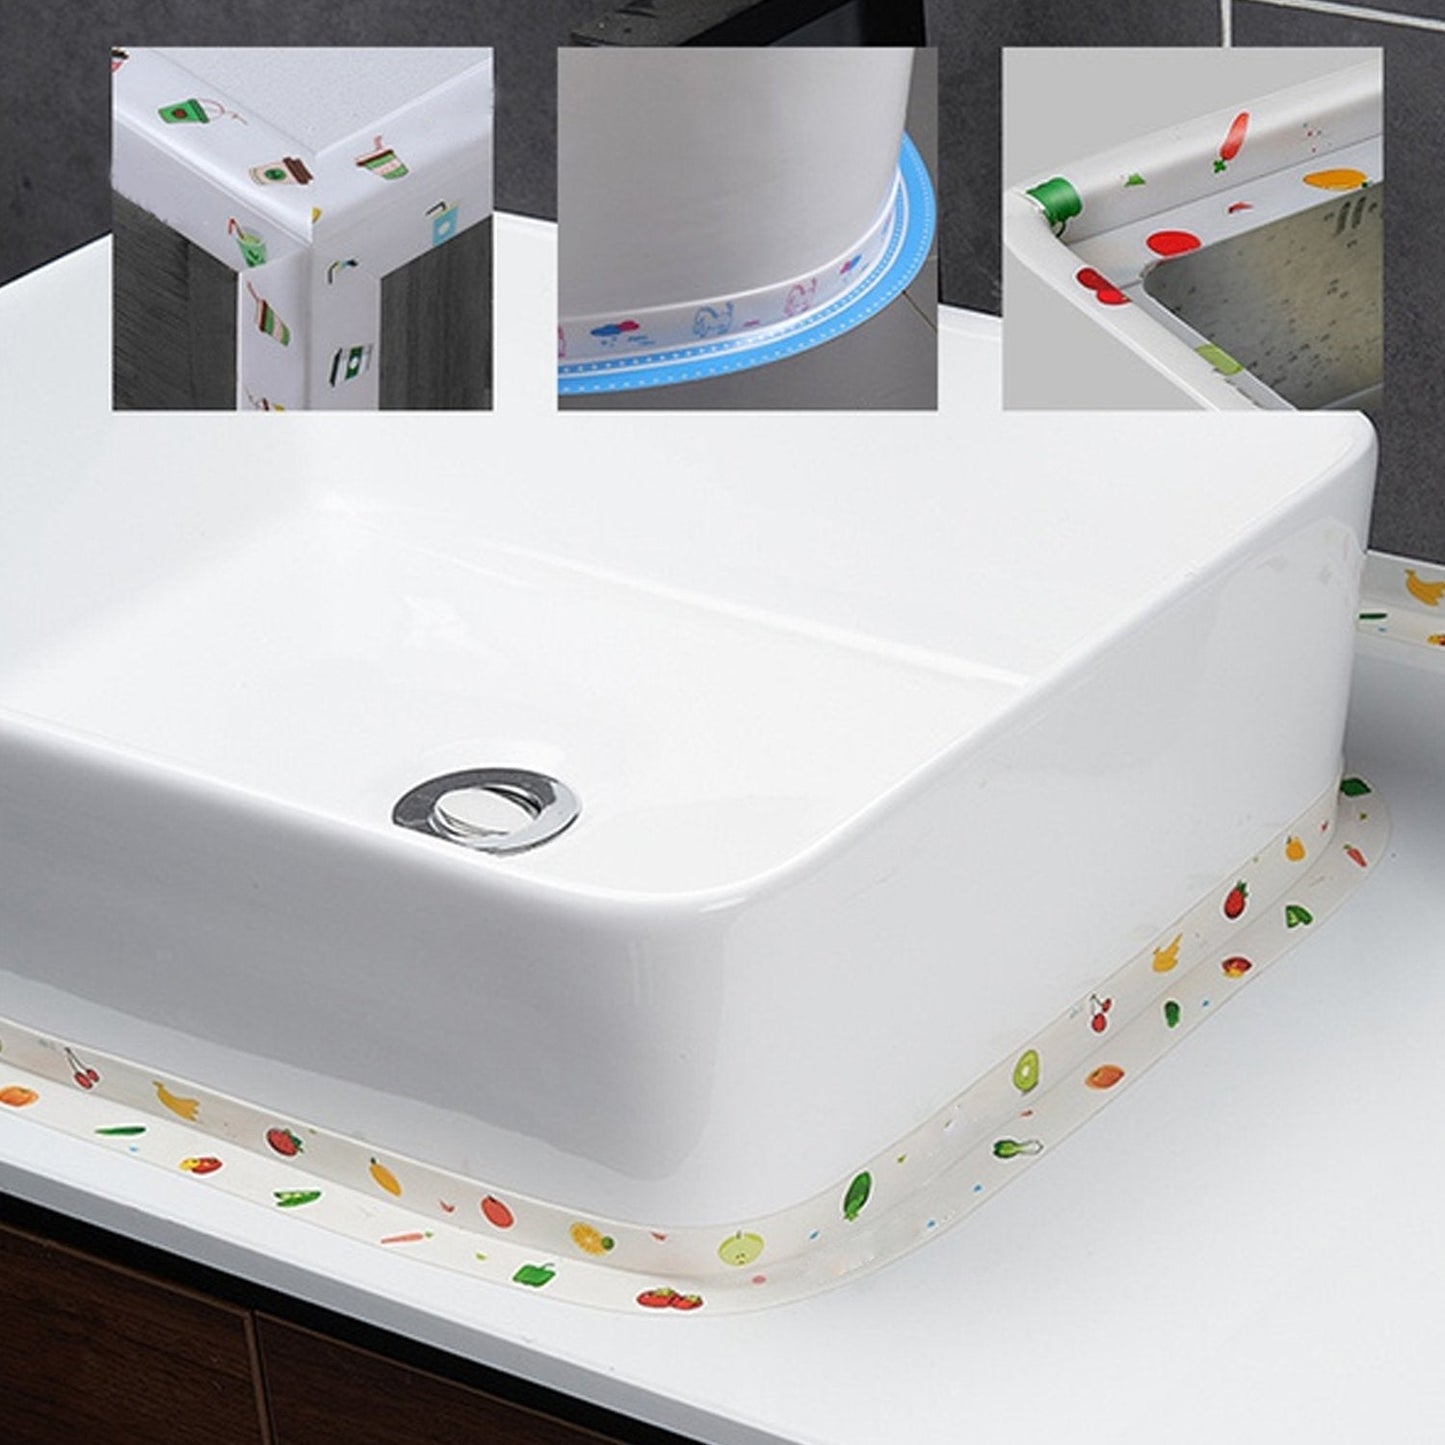 4651 Kitchen Sink Platform Sticker Bathroom Corner Tape (3Meter Size) JK Trends